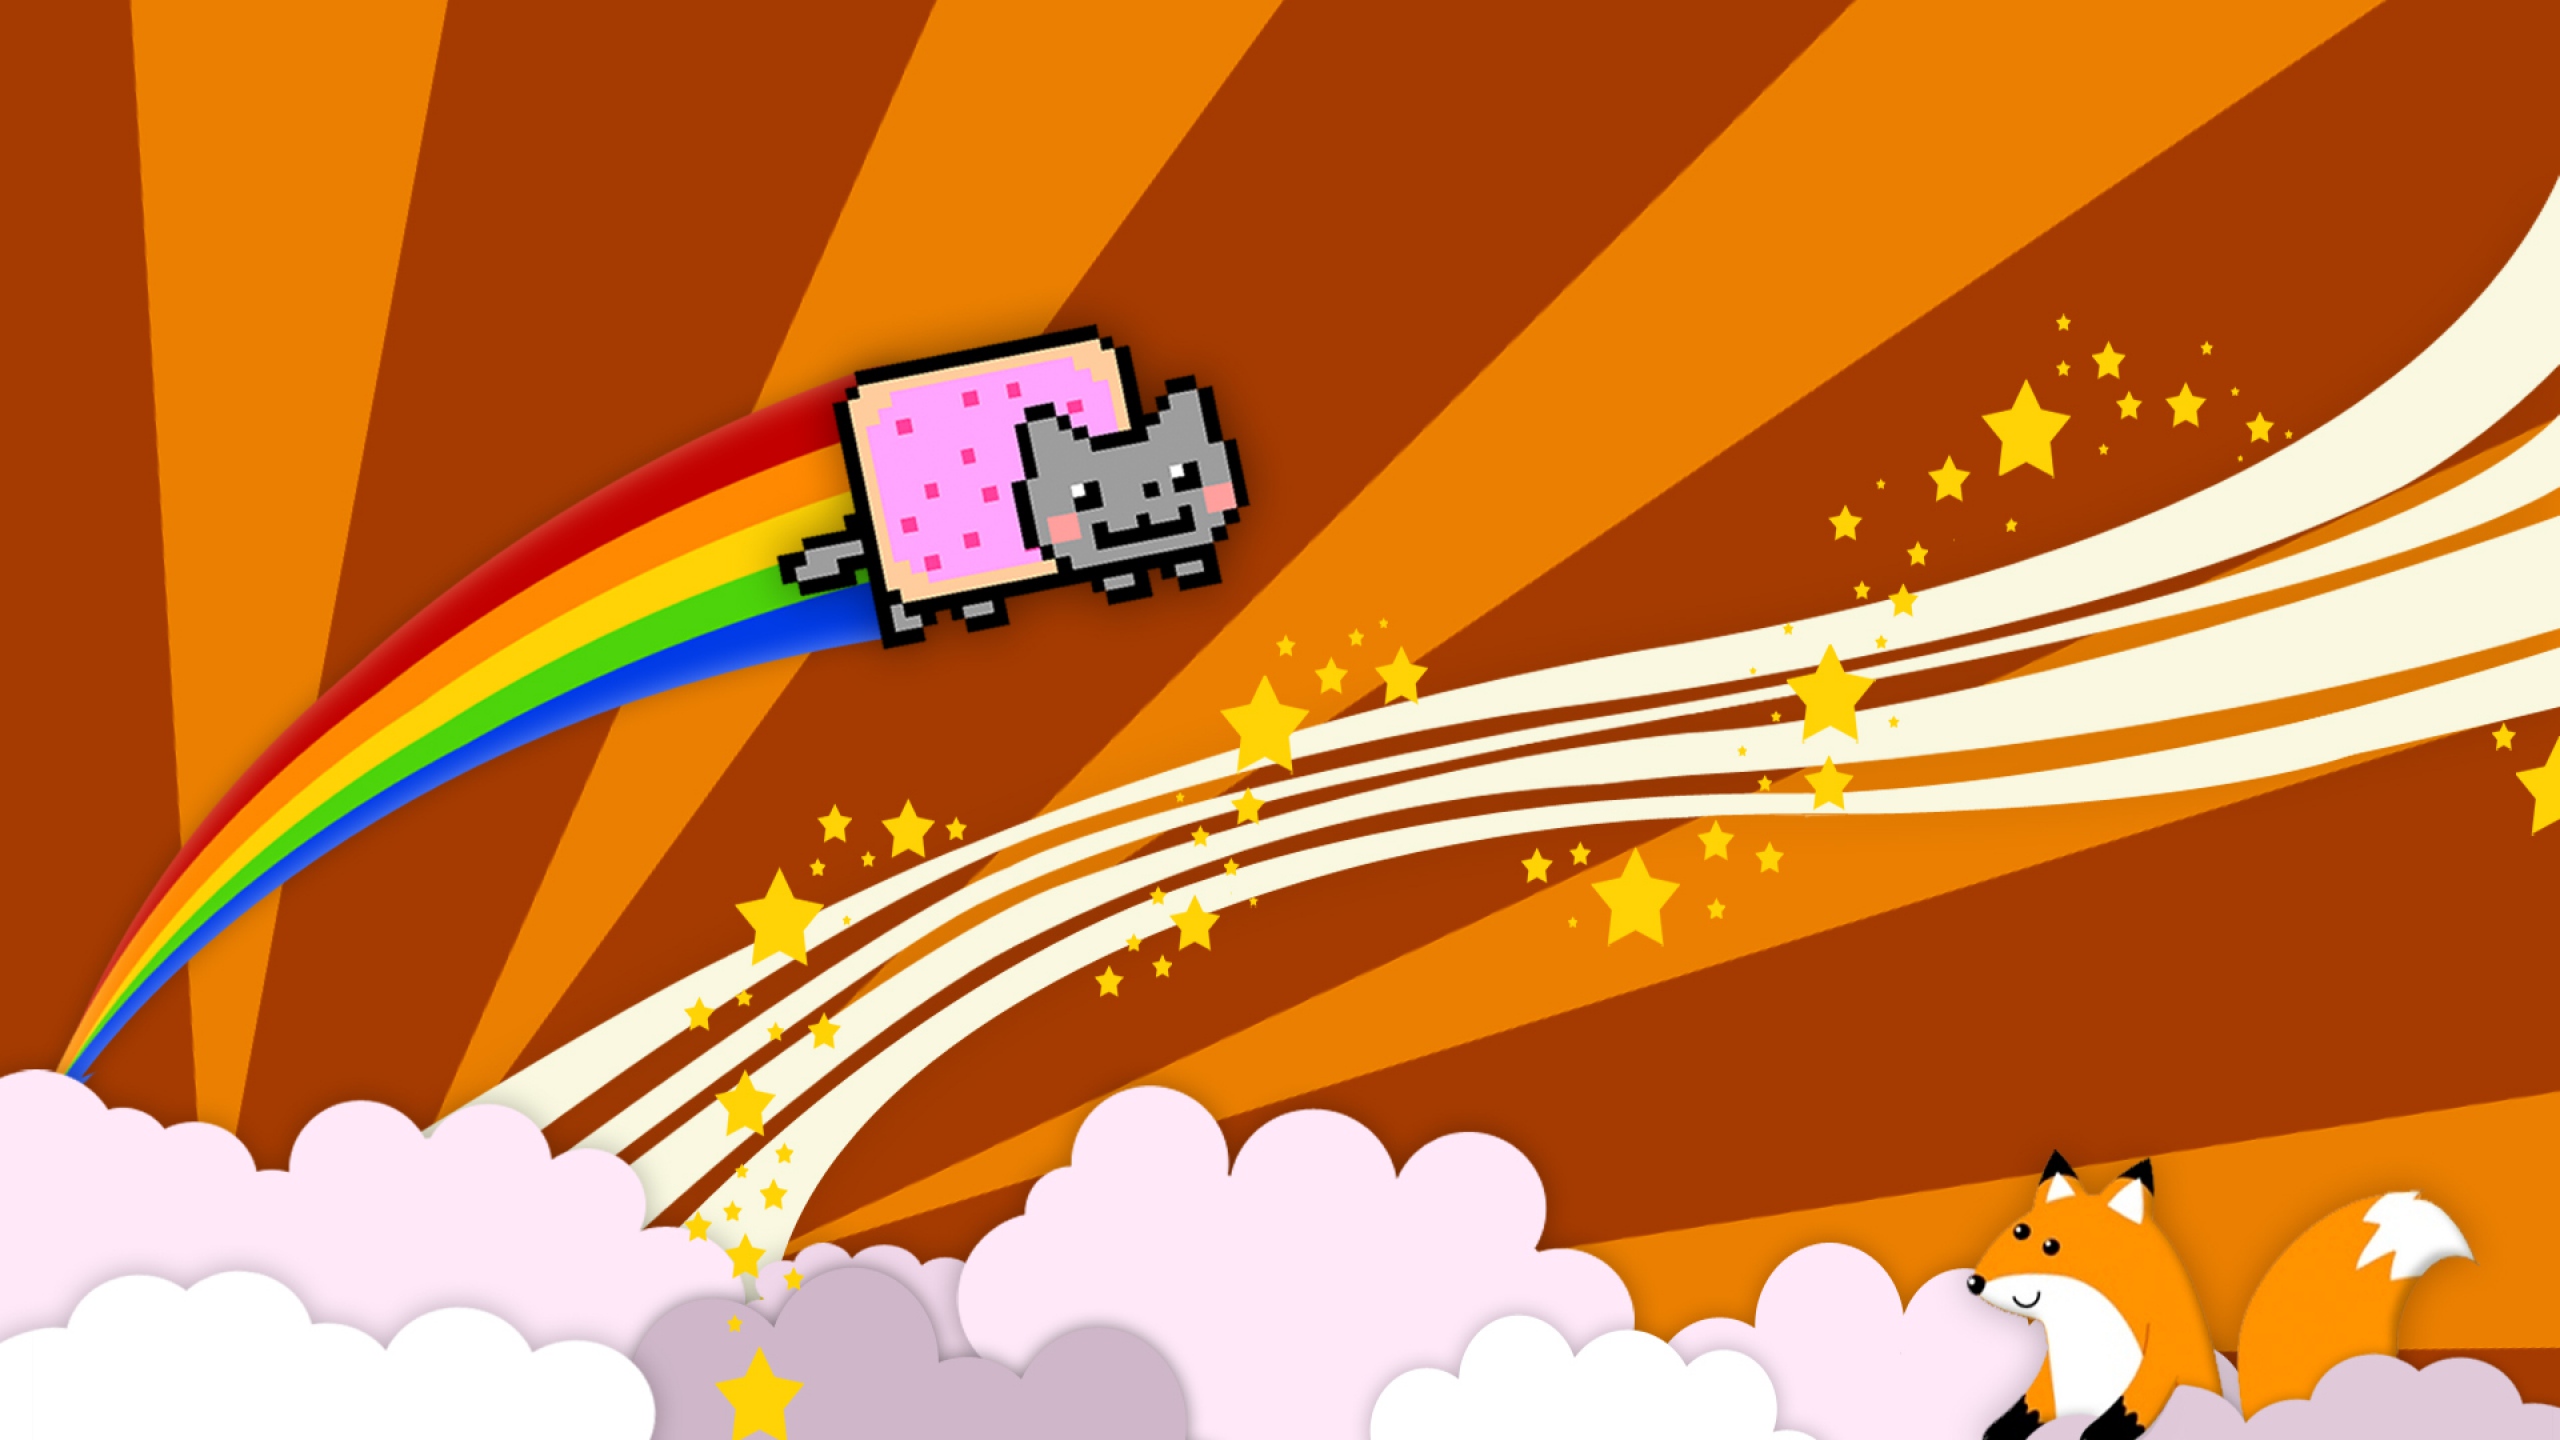 HD Nyan Cat Wallpapers | PixelsTalk.Net2560 x 1440